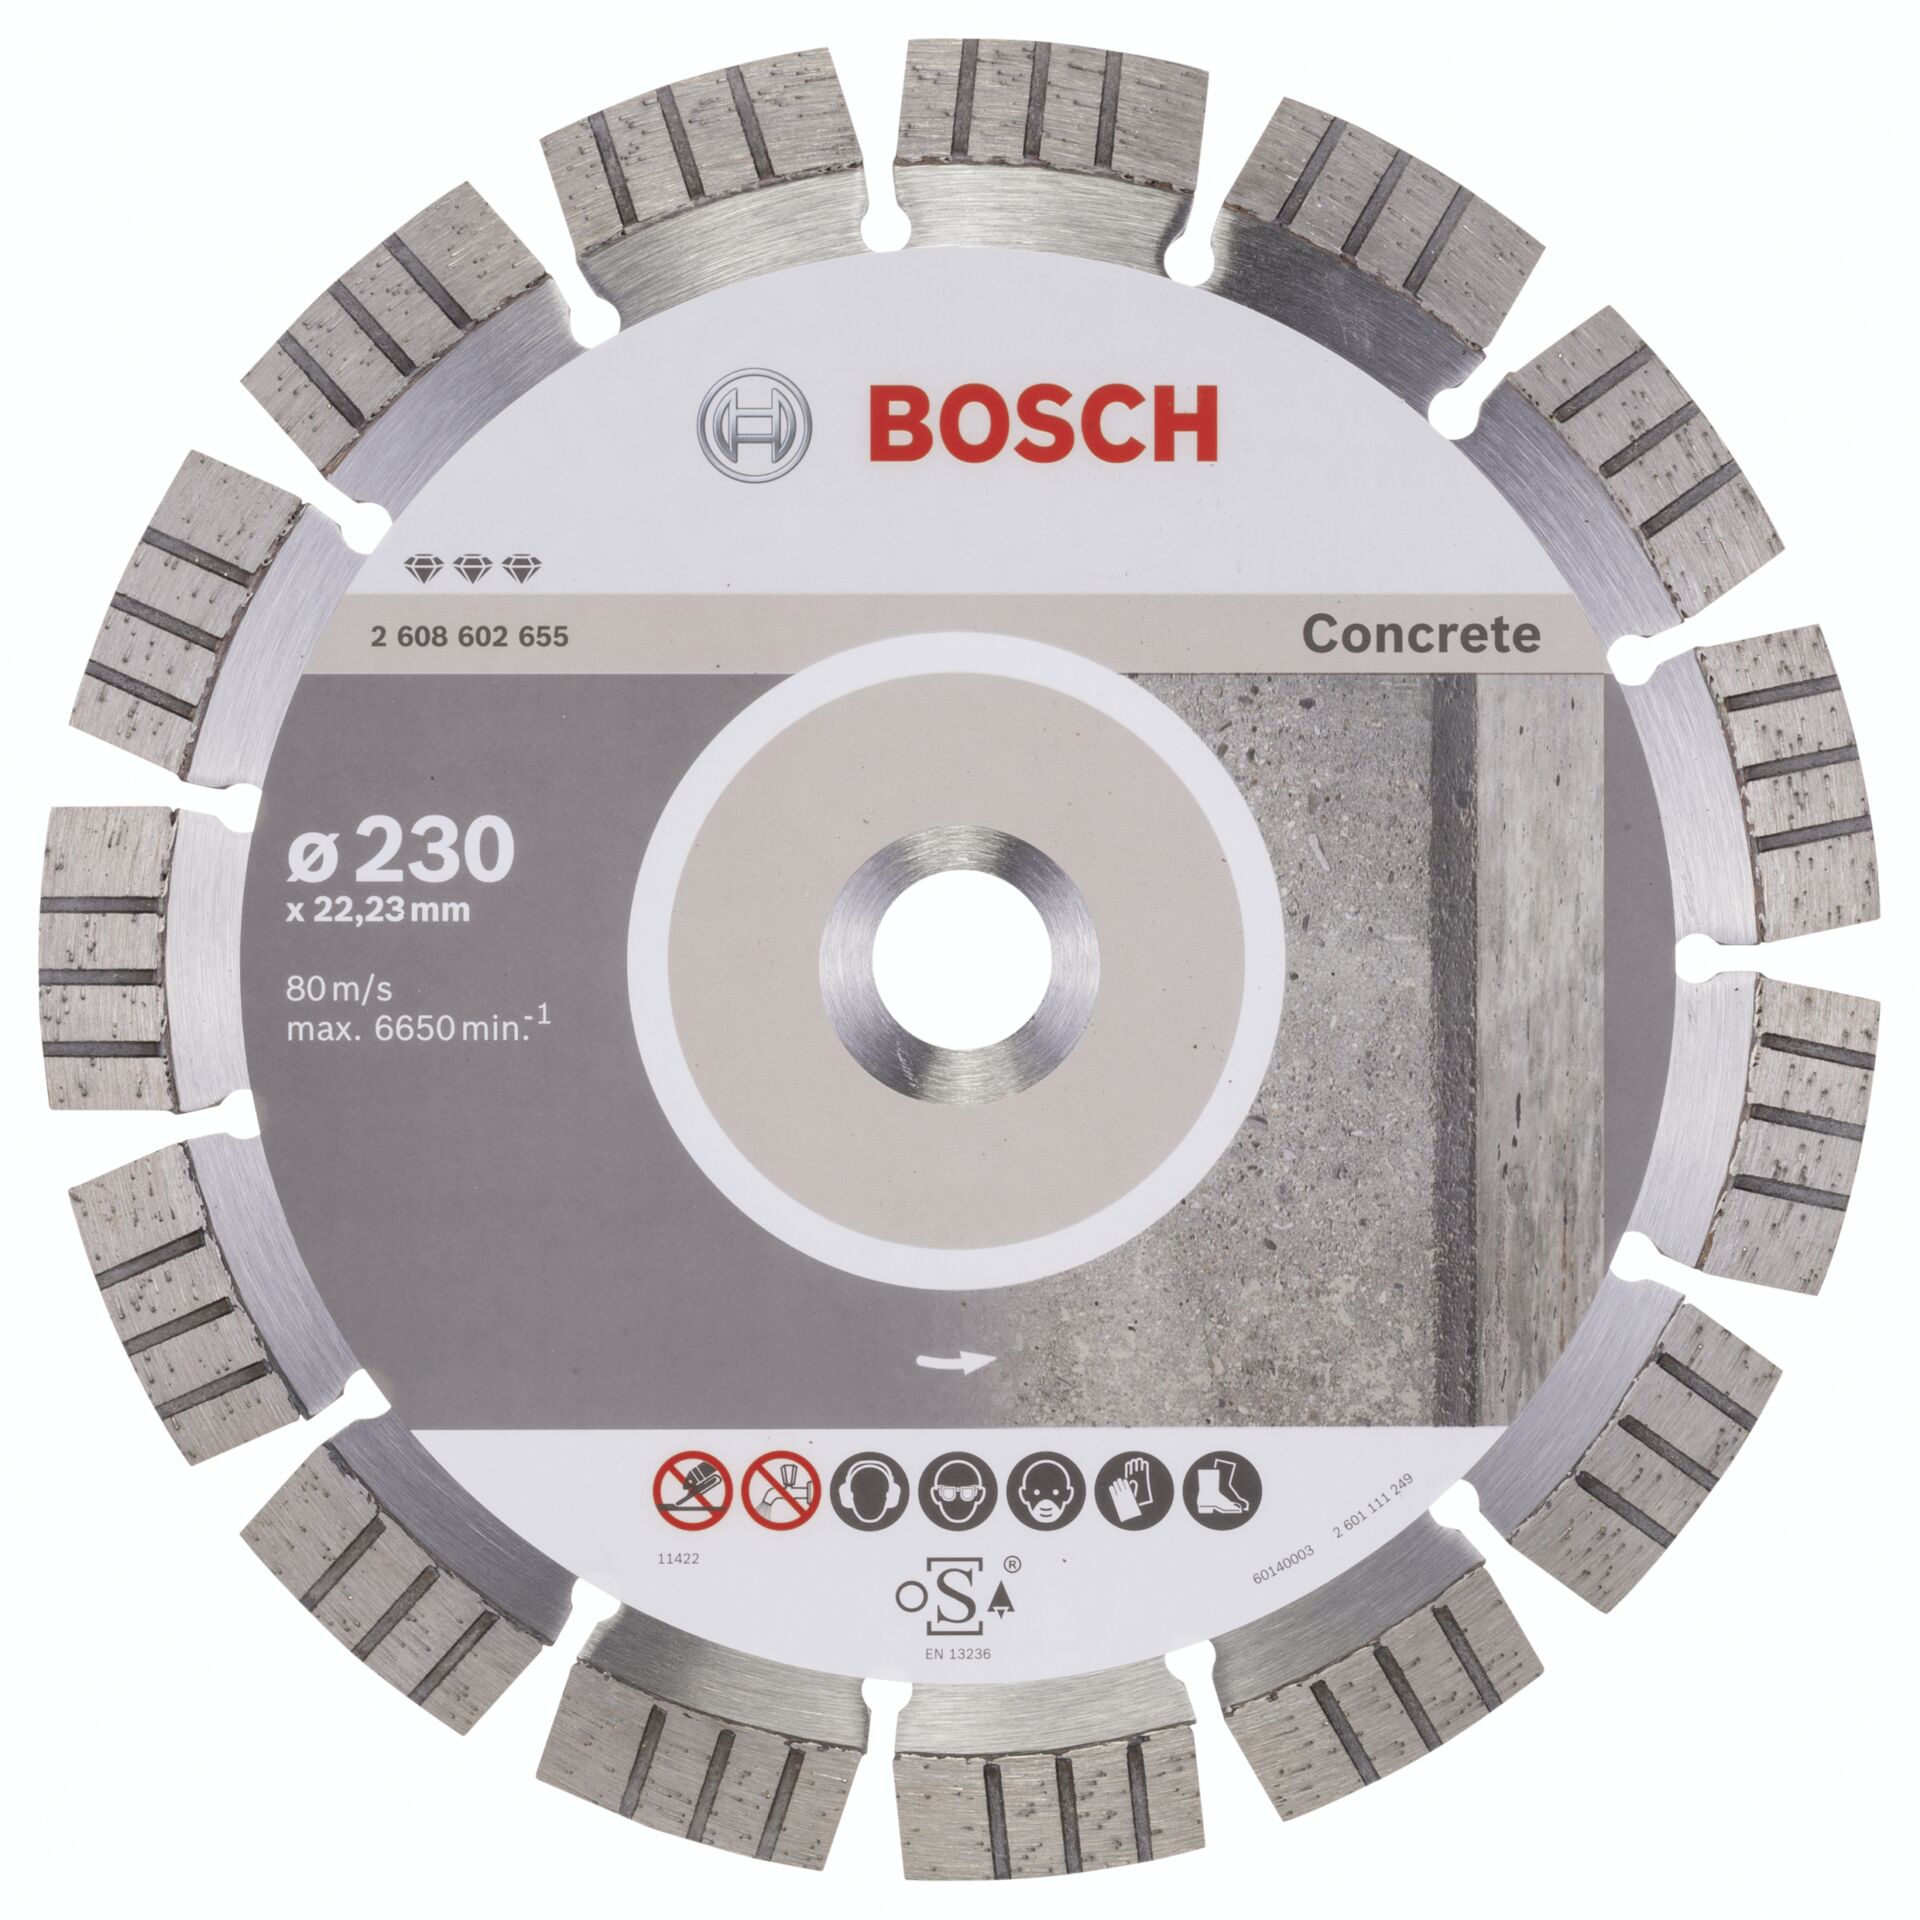 Bosch DIA-TS 230x22,23 Best Concrete